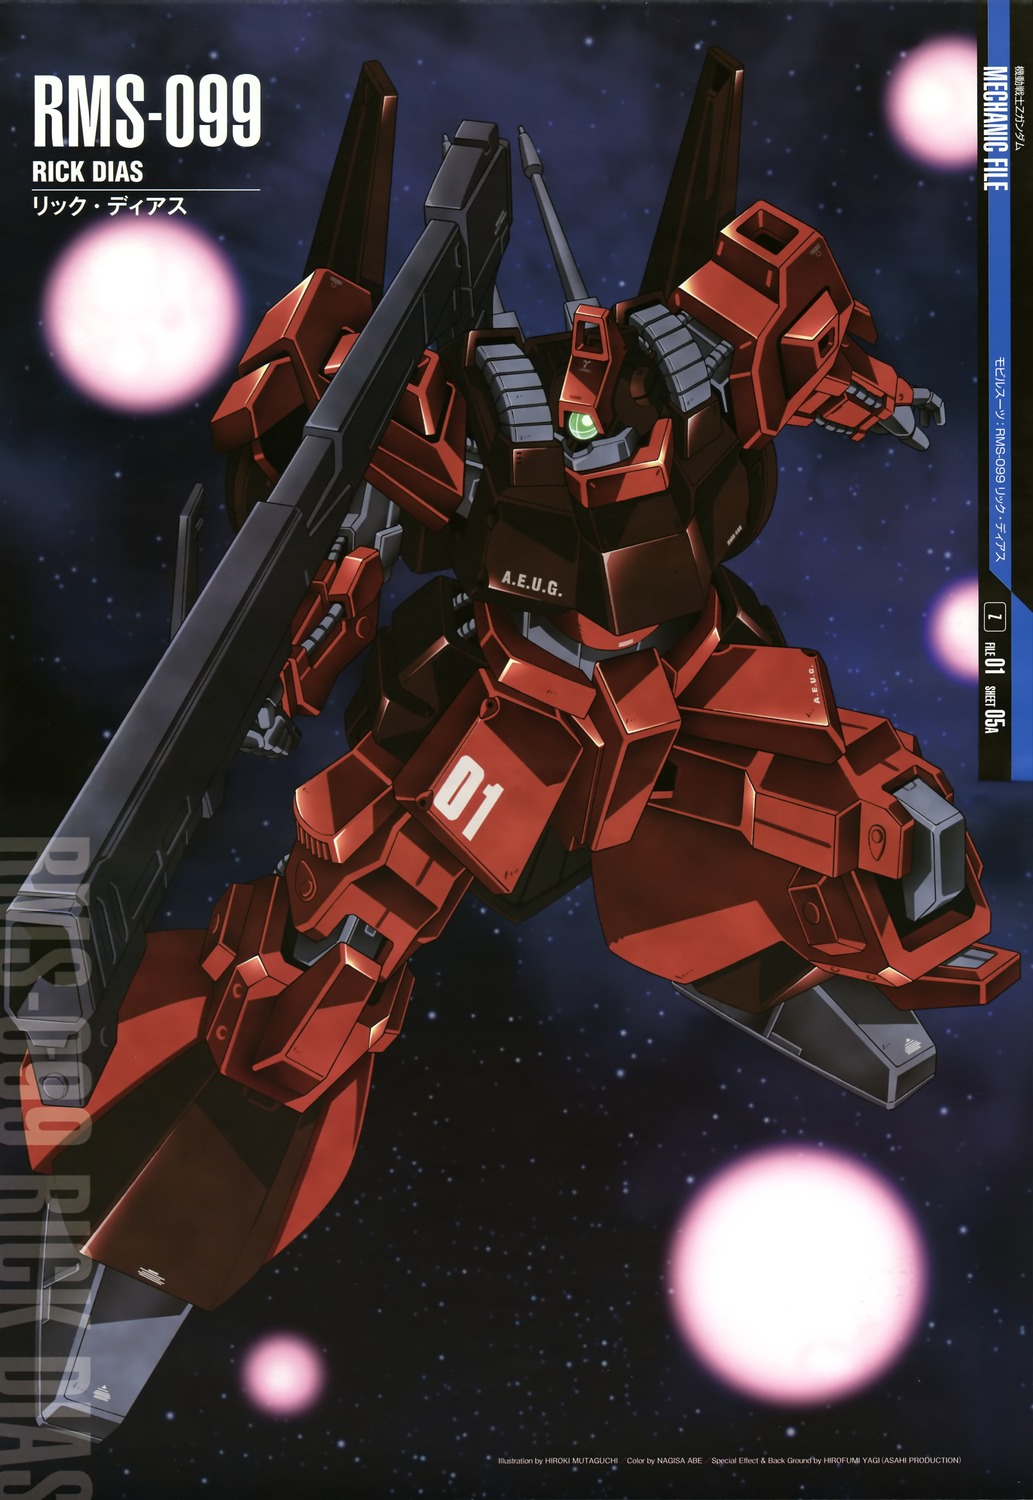 Gundam Guy Mobile Suit Gundam Mechanic File Wallpaper Size Images Part 8